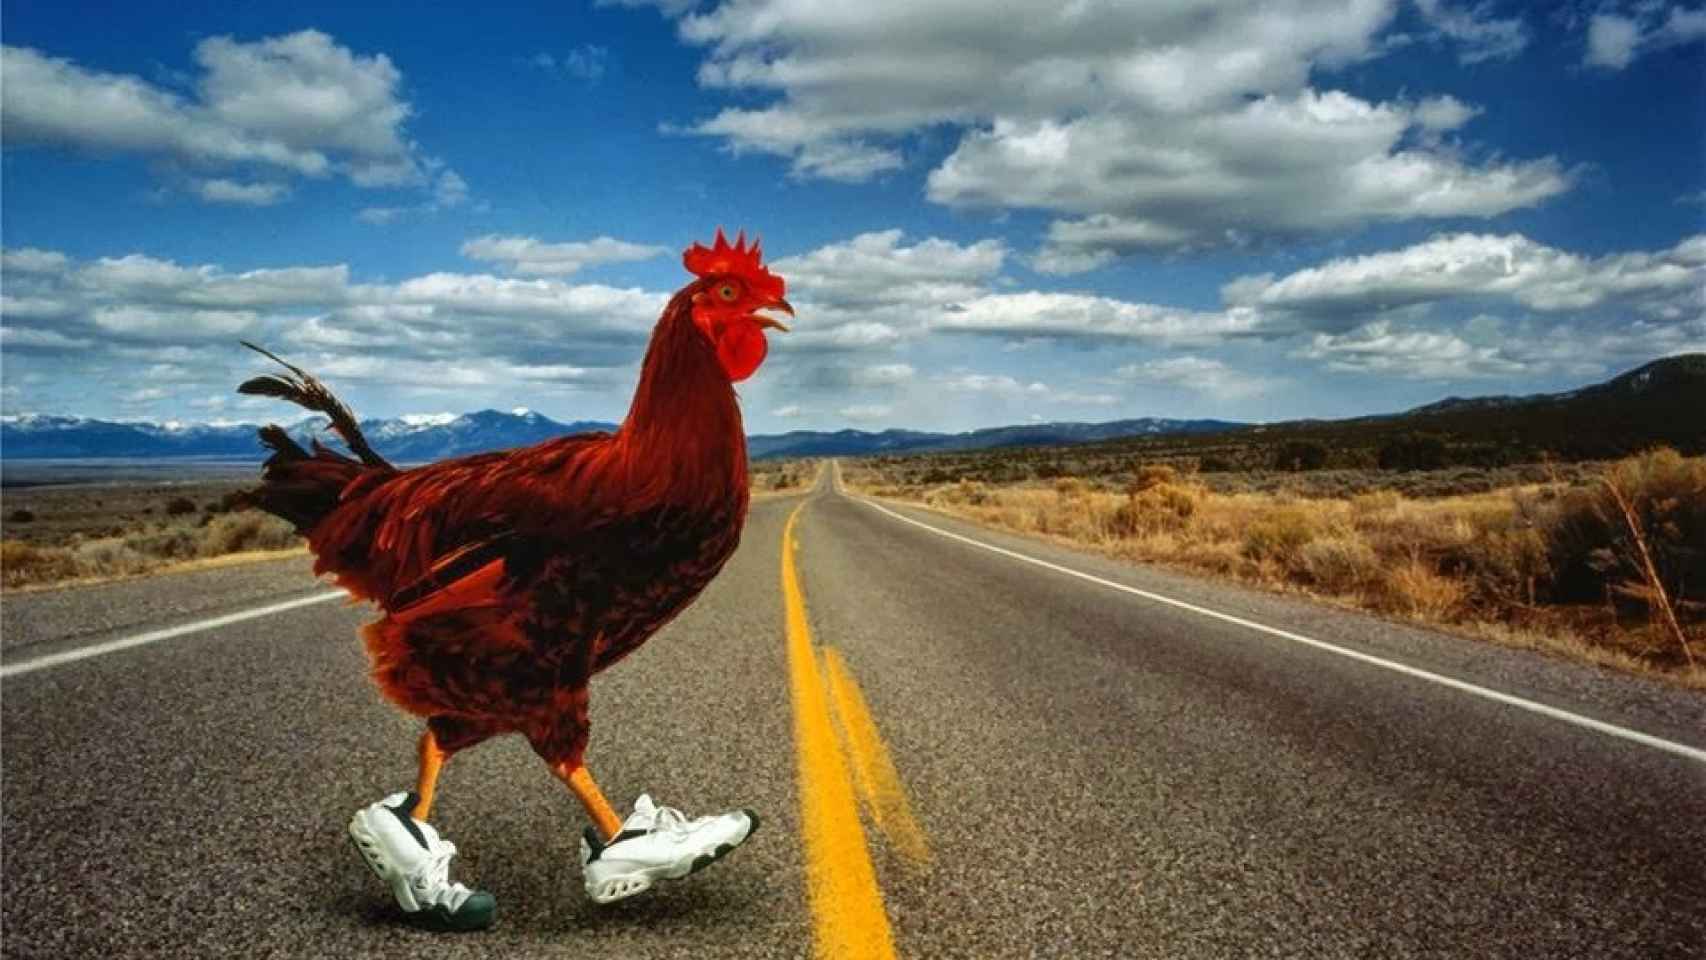 Dificil Insustituible Integrar Por qué el pollo cruzó (o no) la carretera?